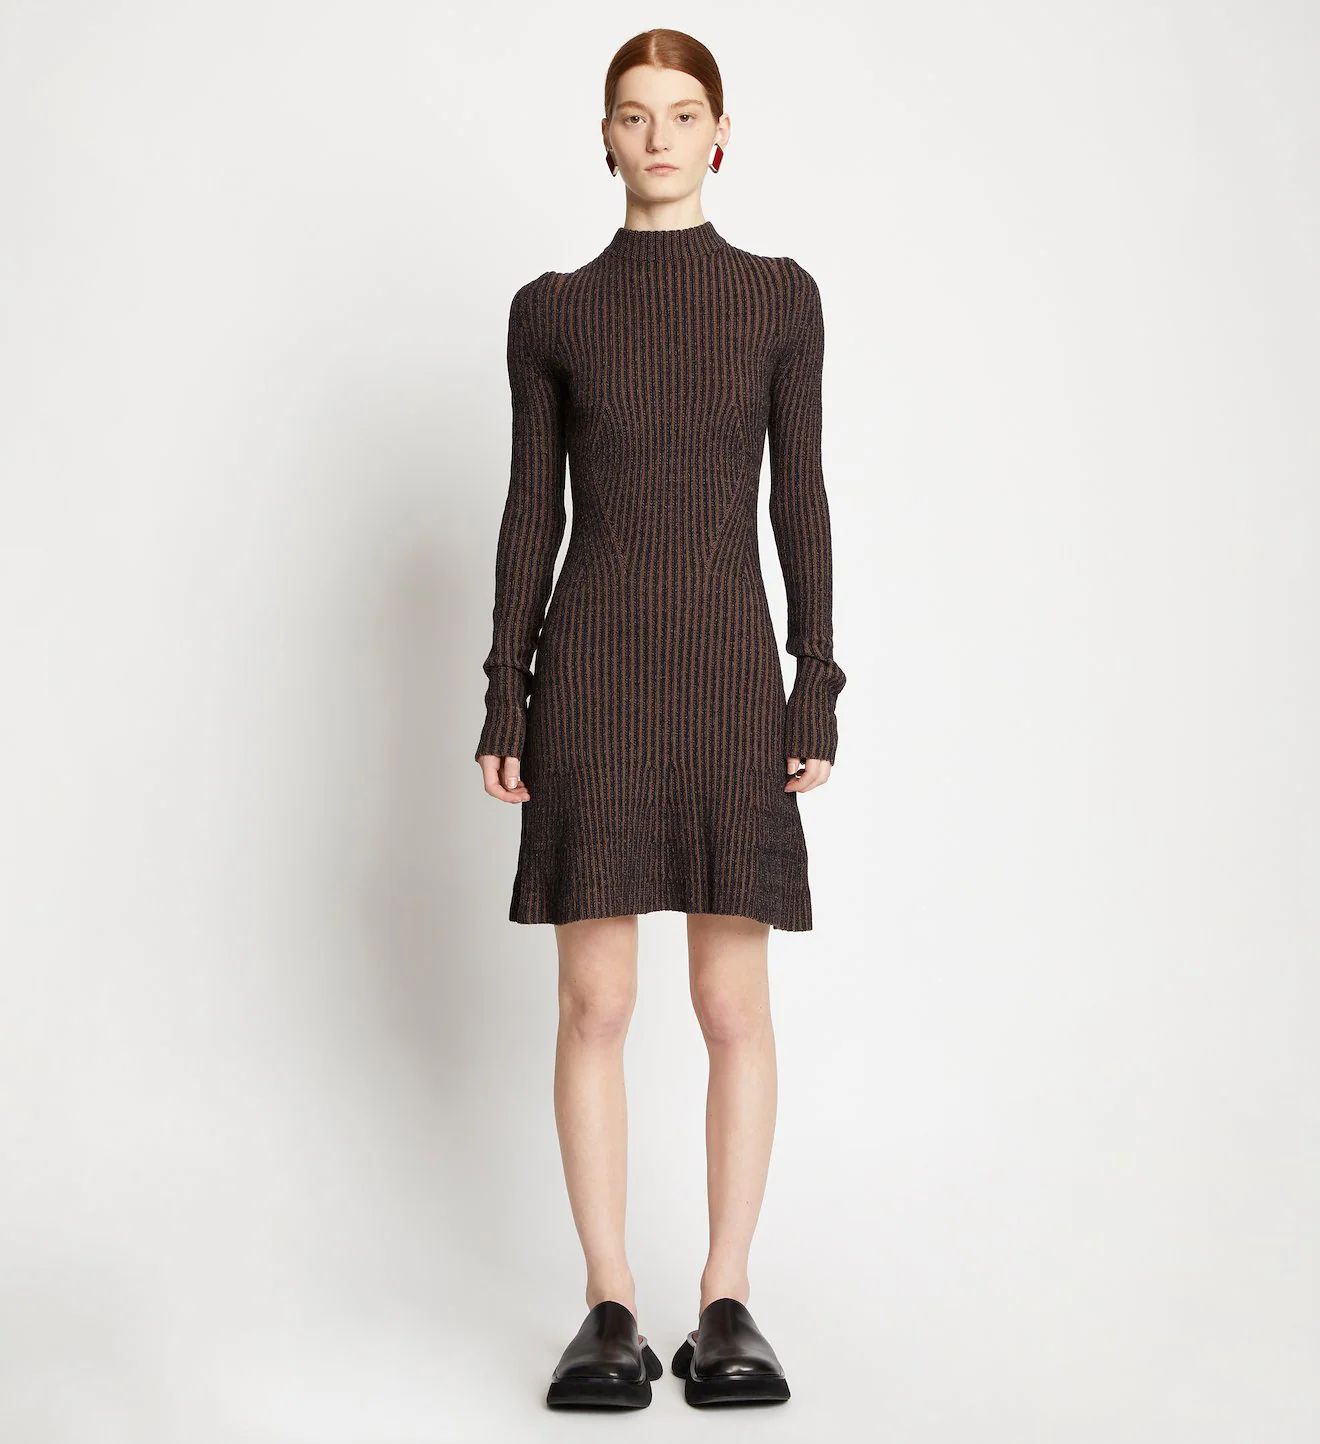 Plaited Rib Sweater Dress in black/dark brown | Proenza Schouler | Proenza Schouler LLC